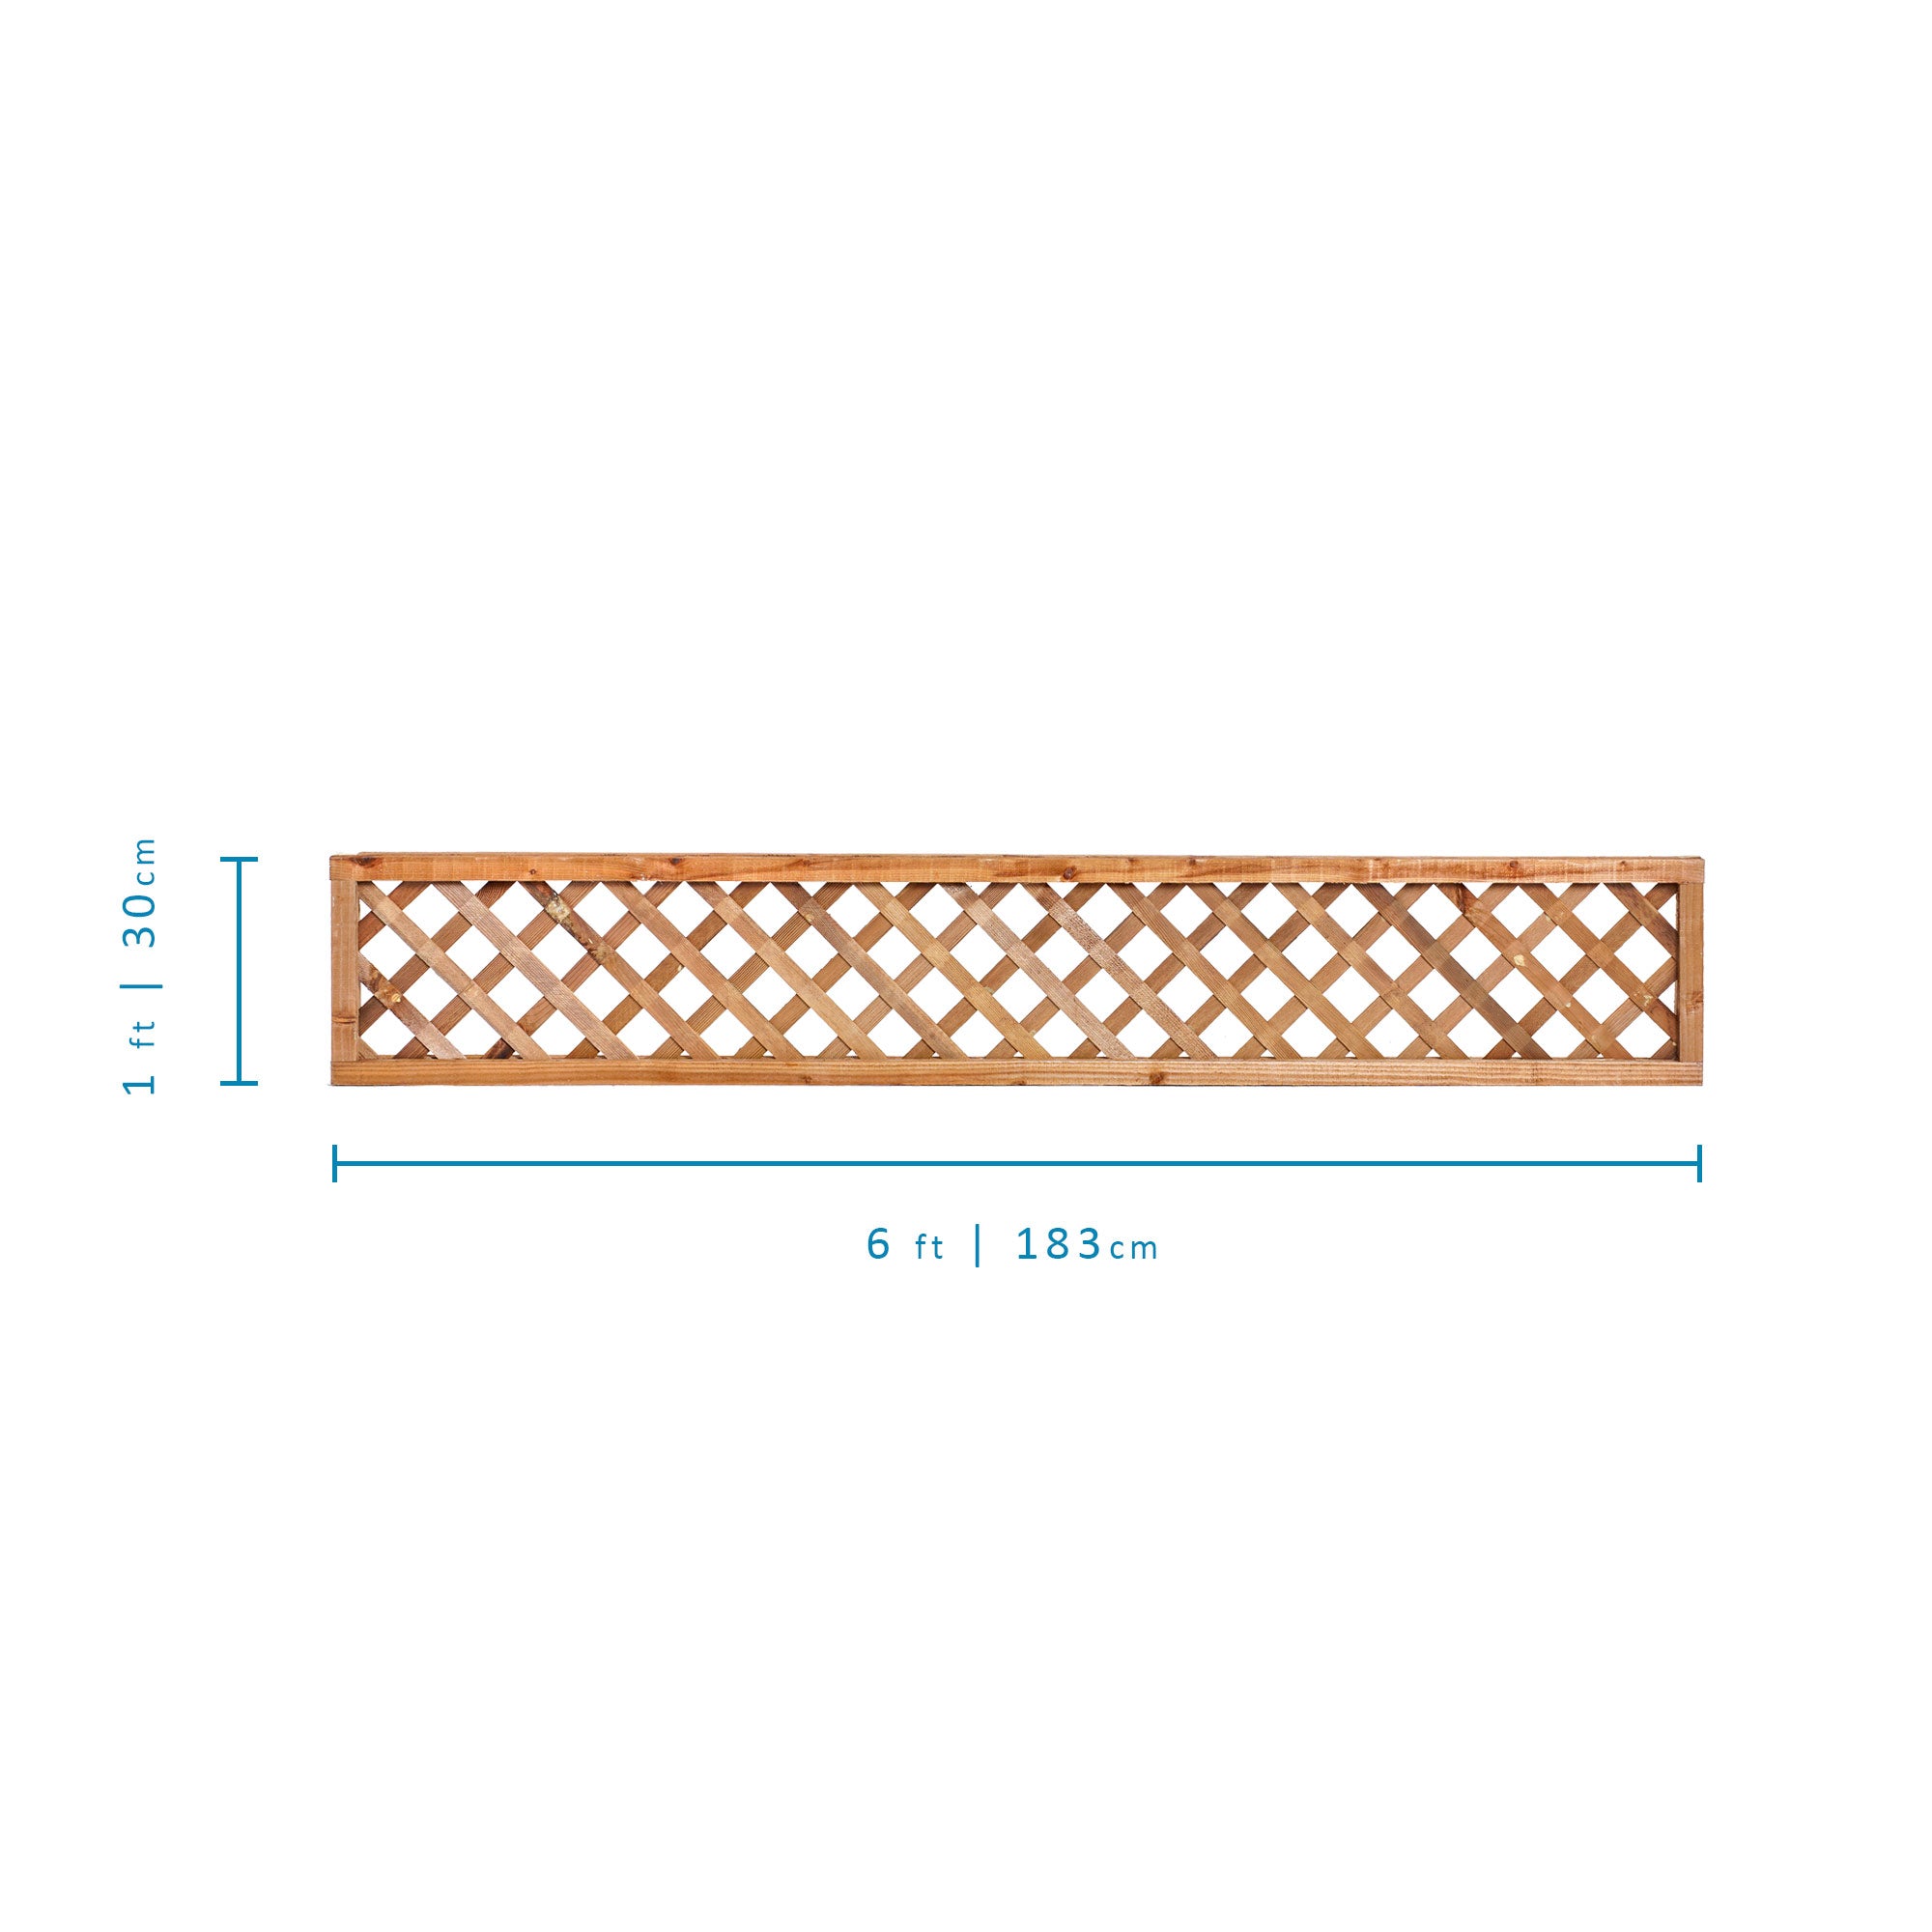 6ft x 1ft measurements of Diamond Lattice Trellis - Pressure Treated Brown